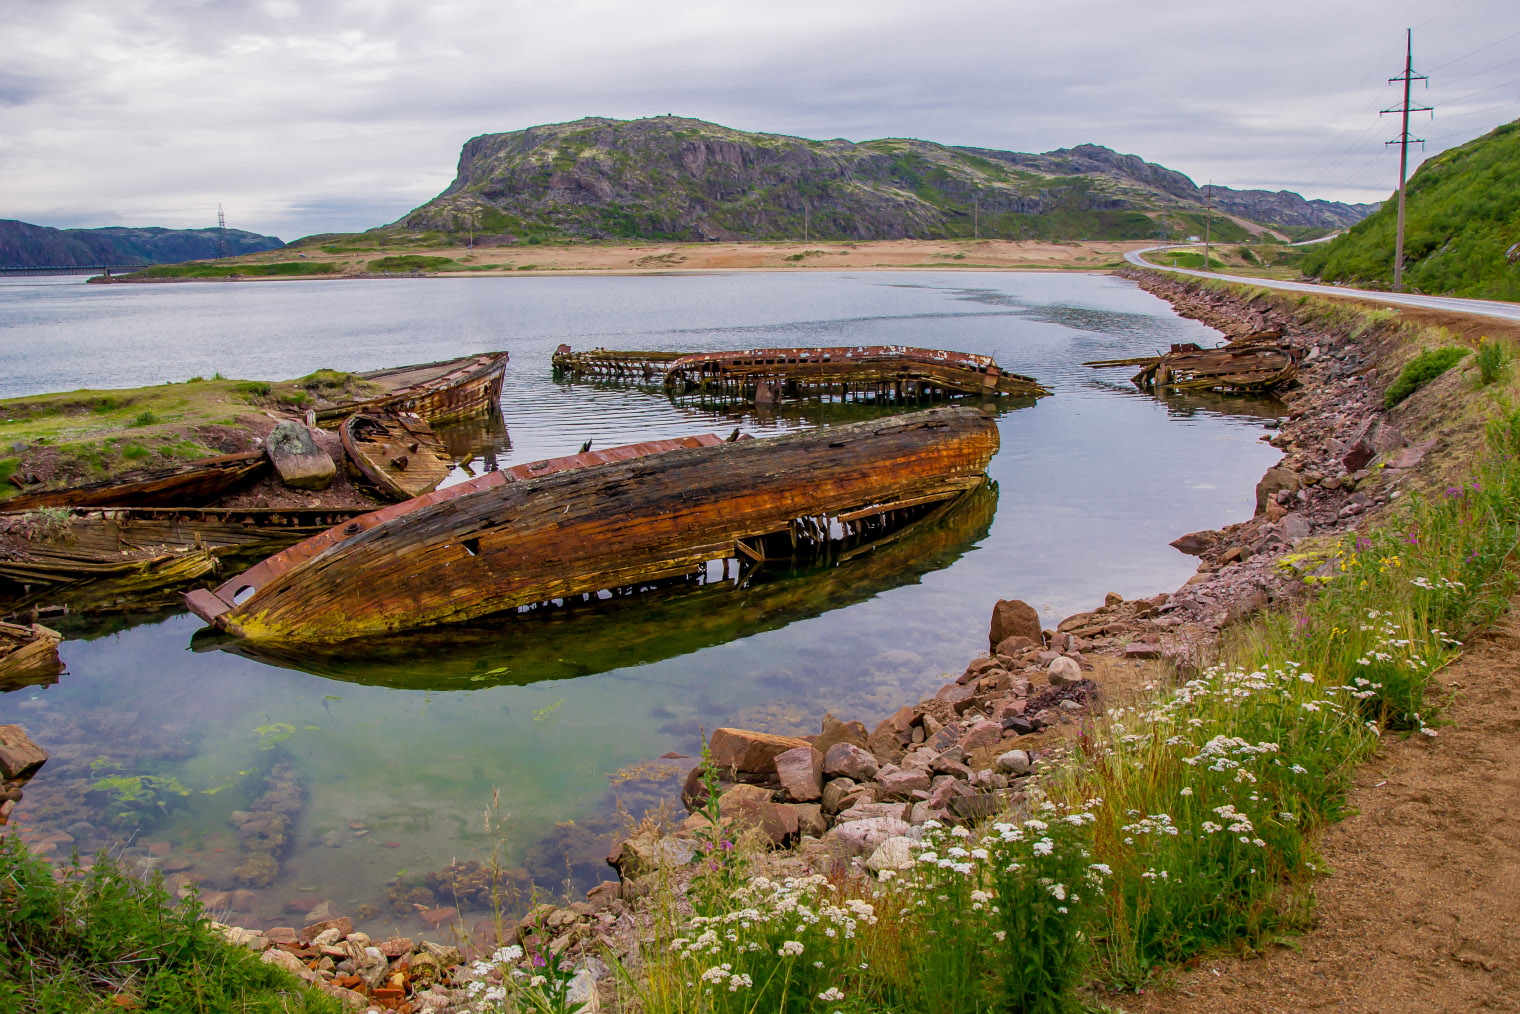 Кладбище кораблей в Териберке. Фотография: yagoda-85 / Shutterstock / FOTODOM